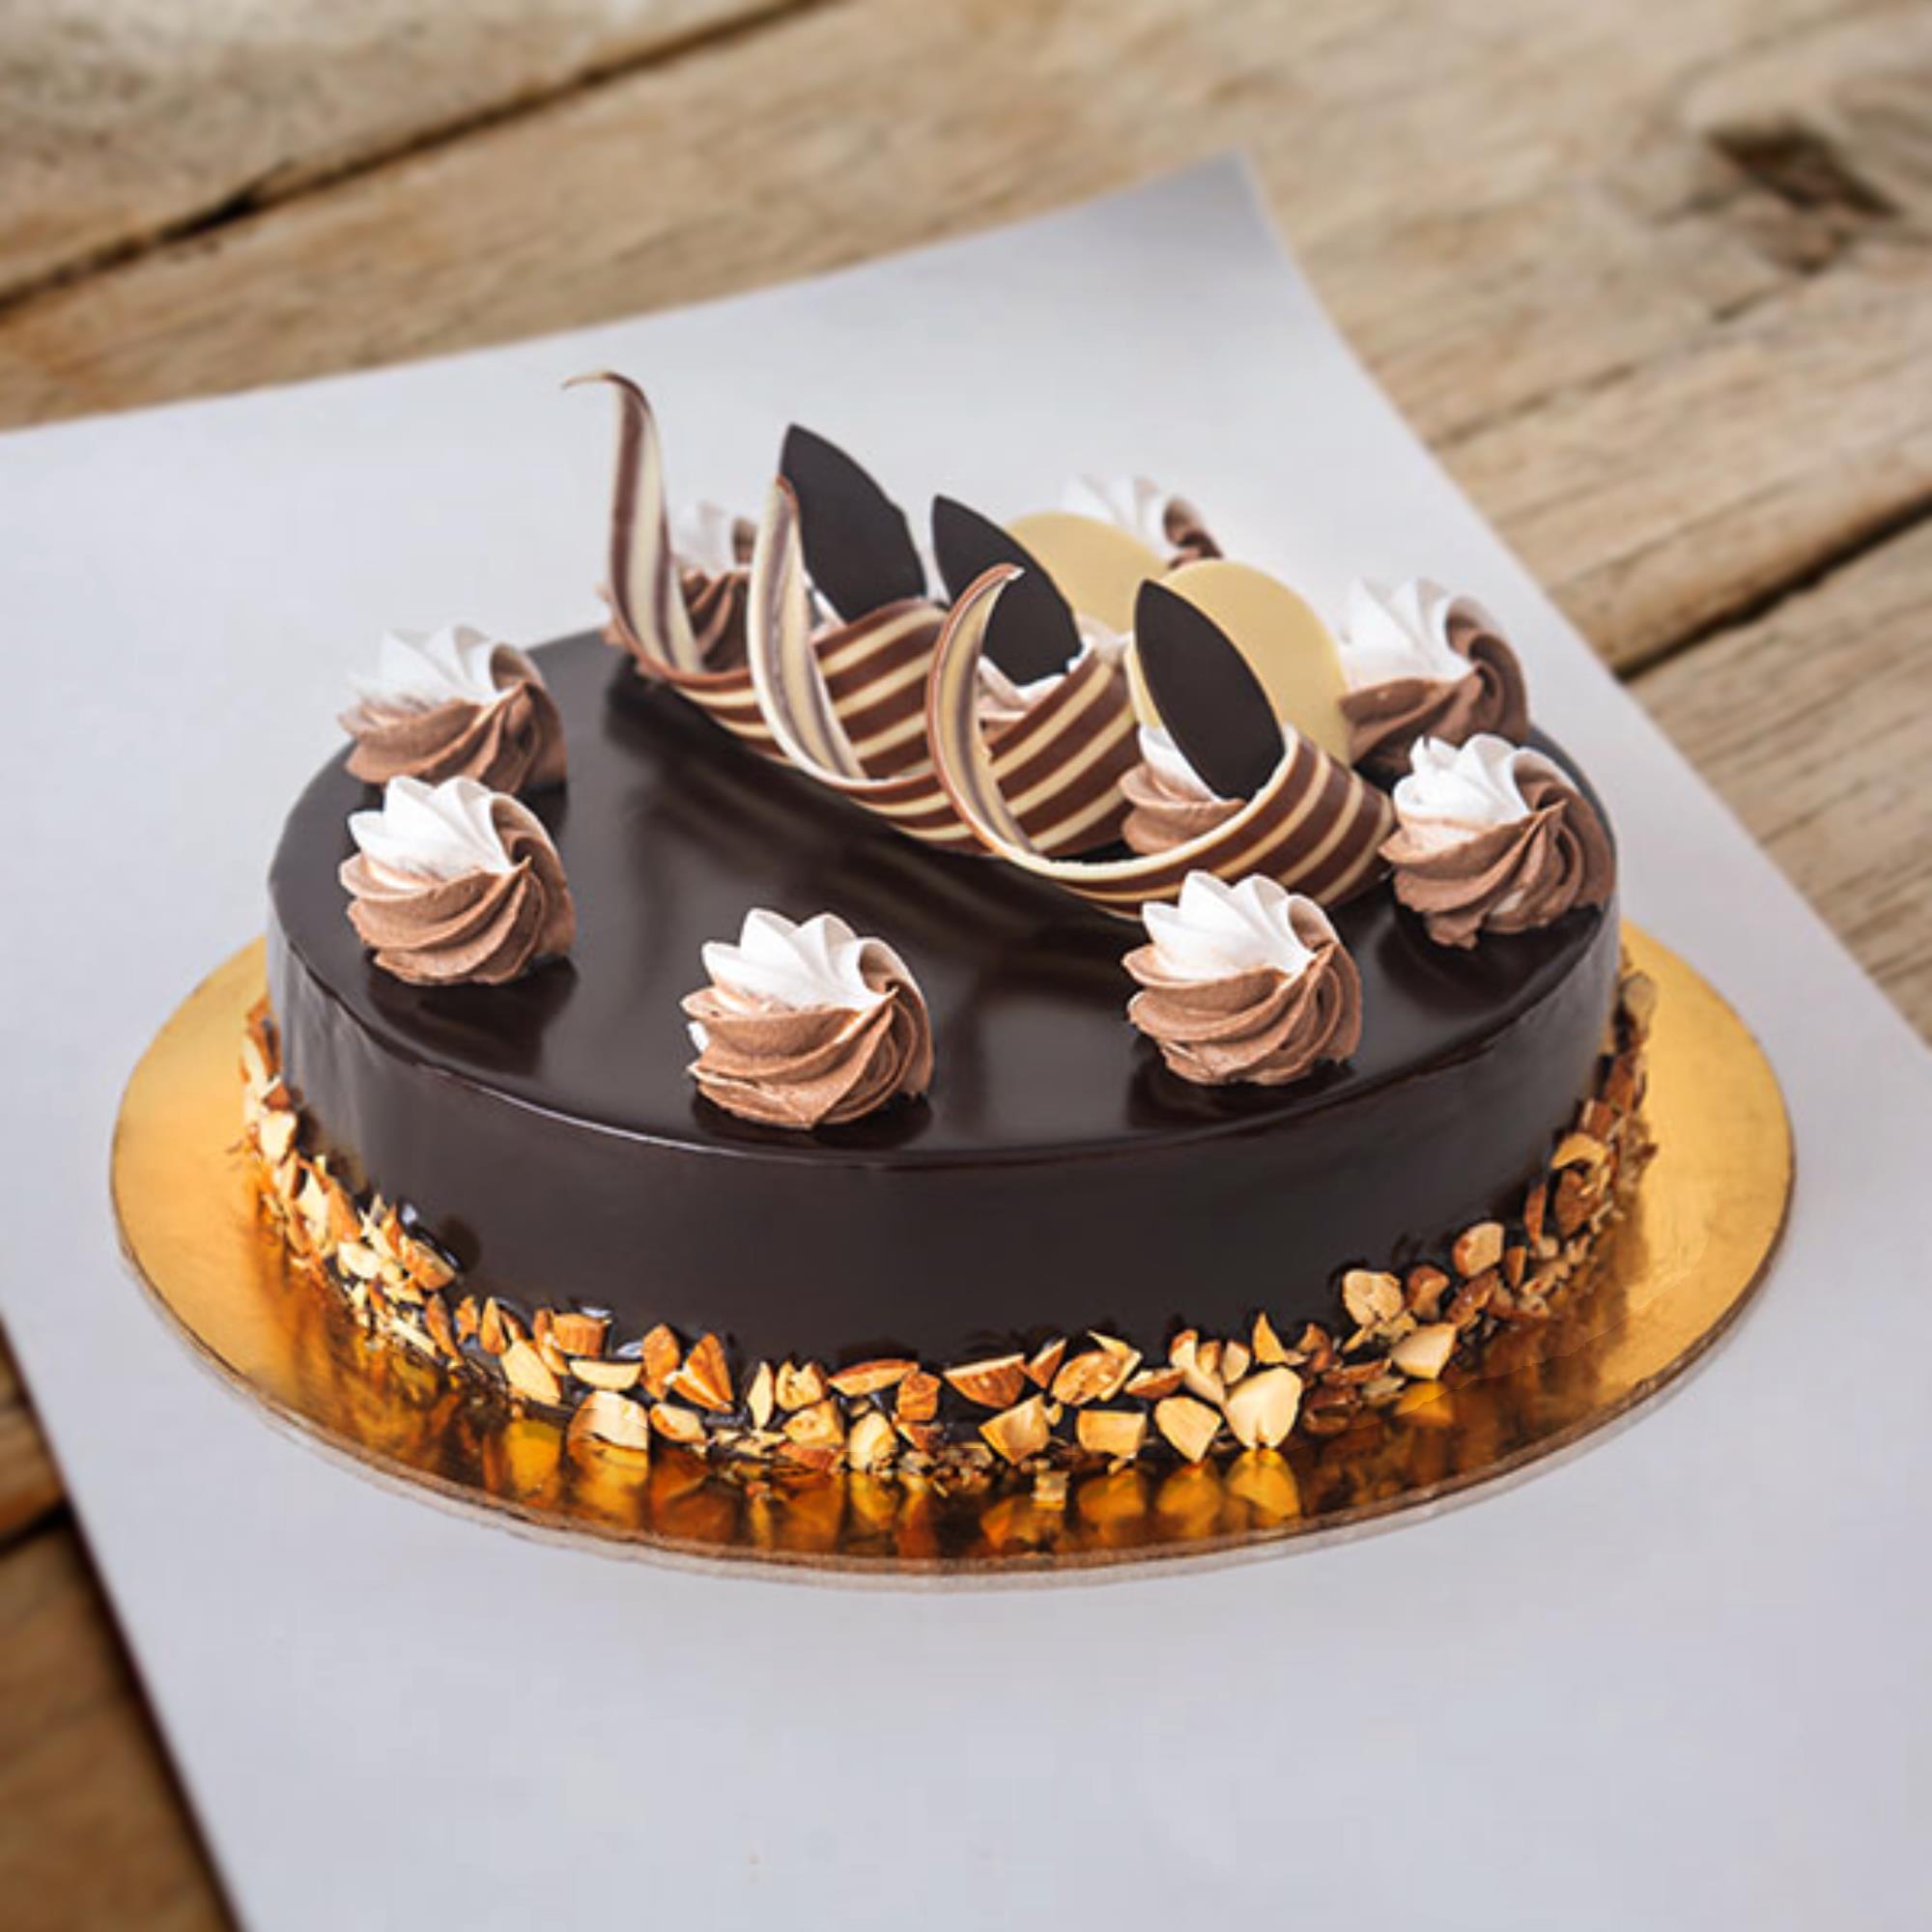 Joy Delight Roasted Almonds Chocolate Cake at Rs 1400/kilogram in Mumbai |  ID: 19815232512